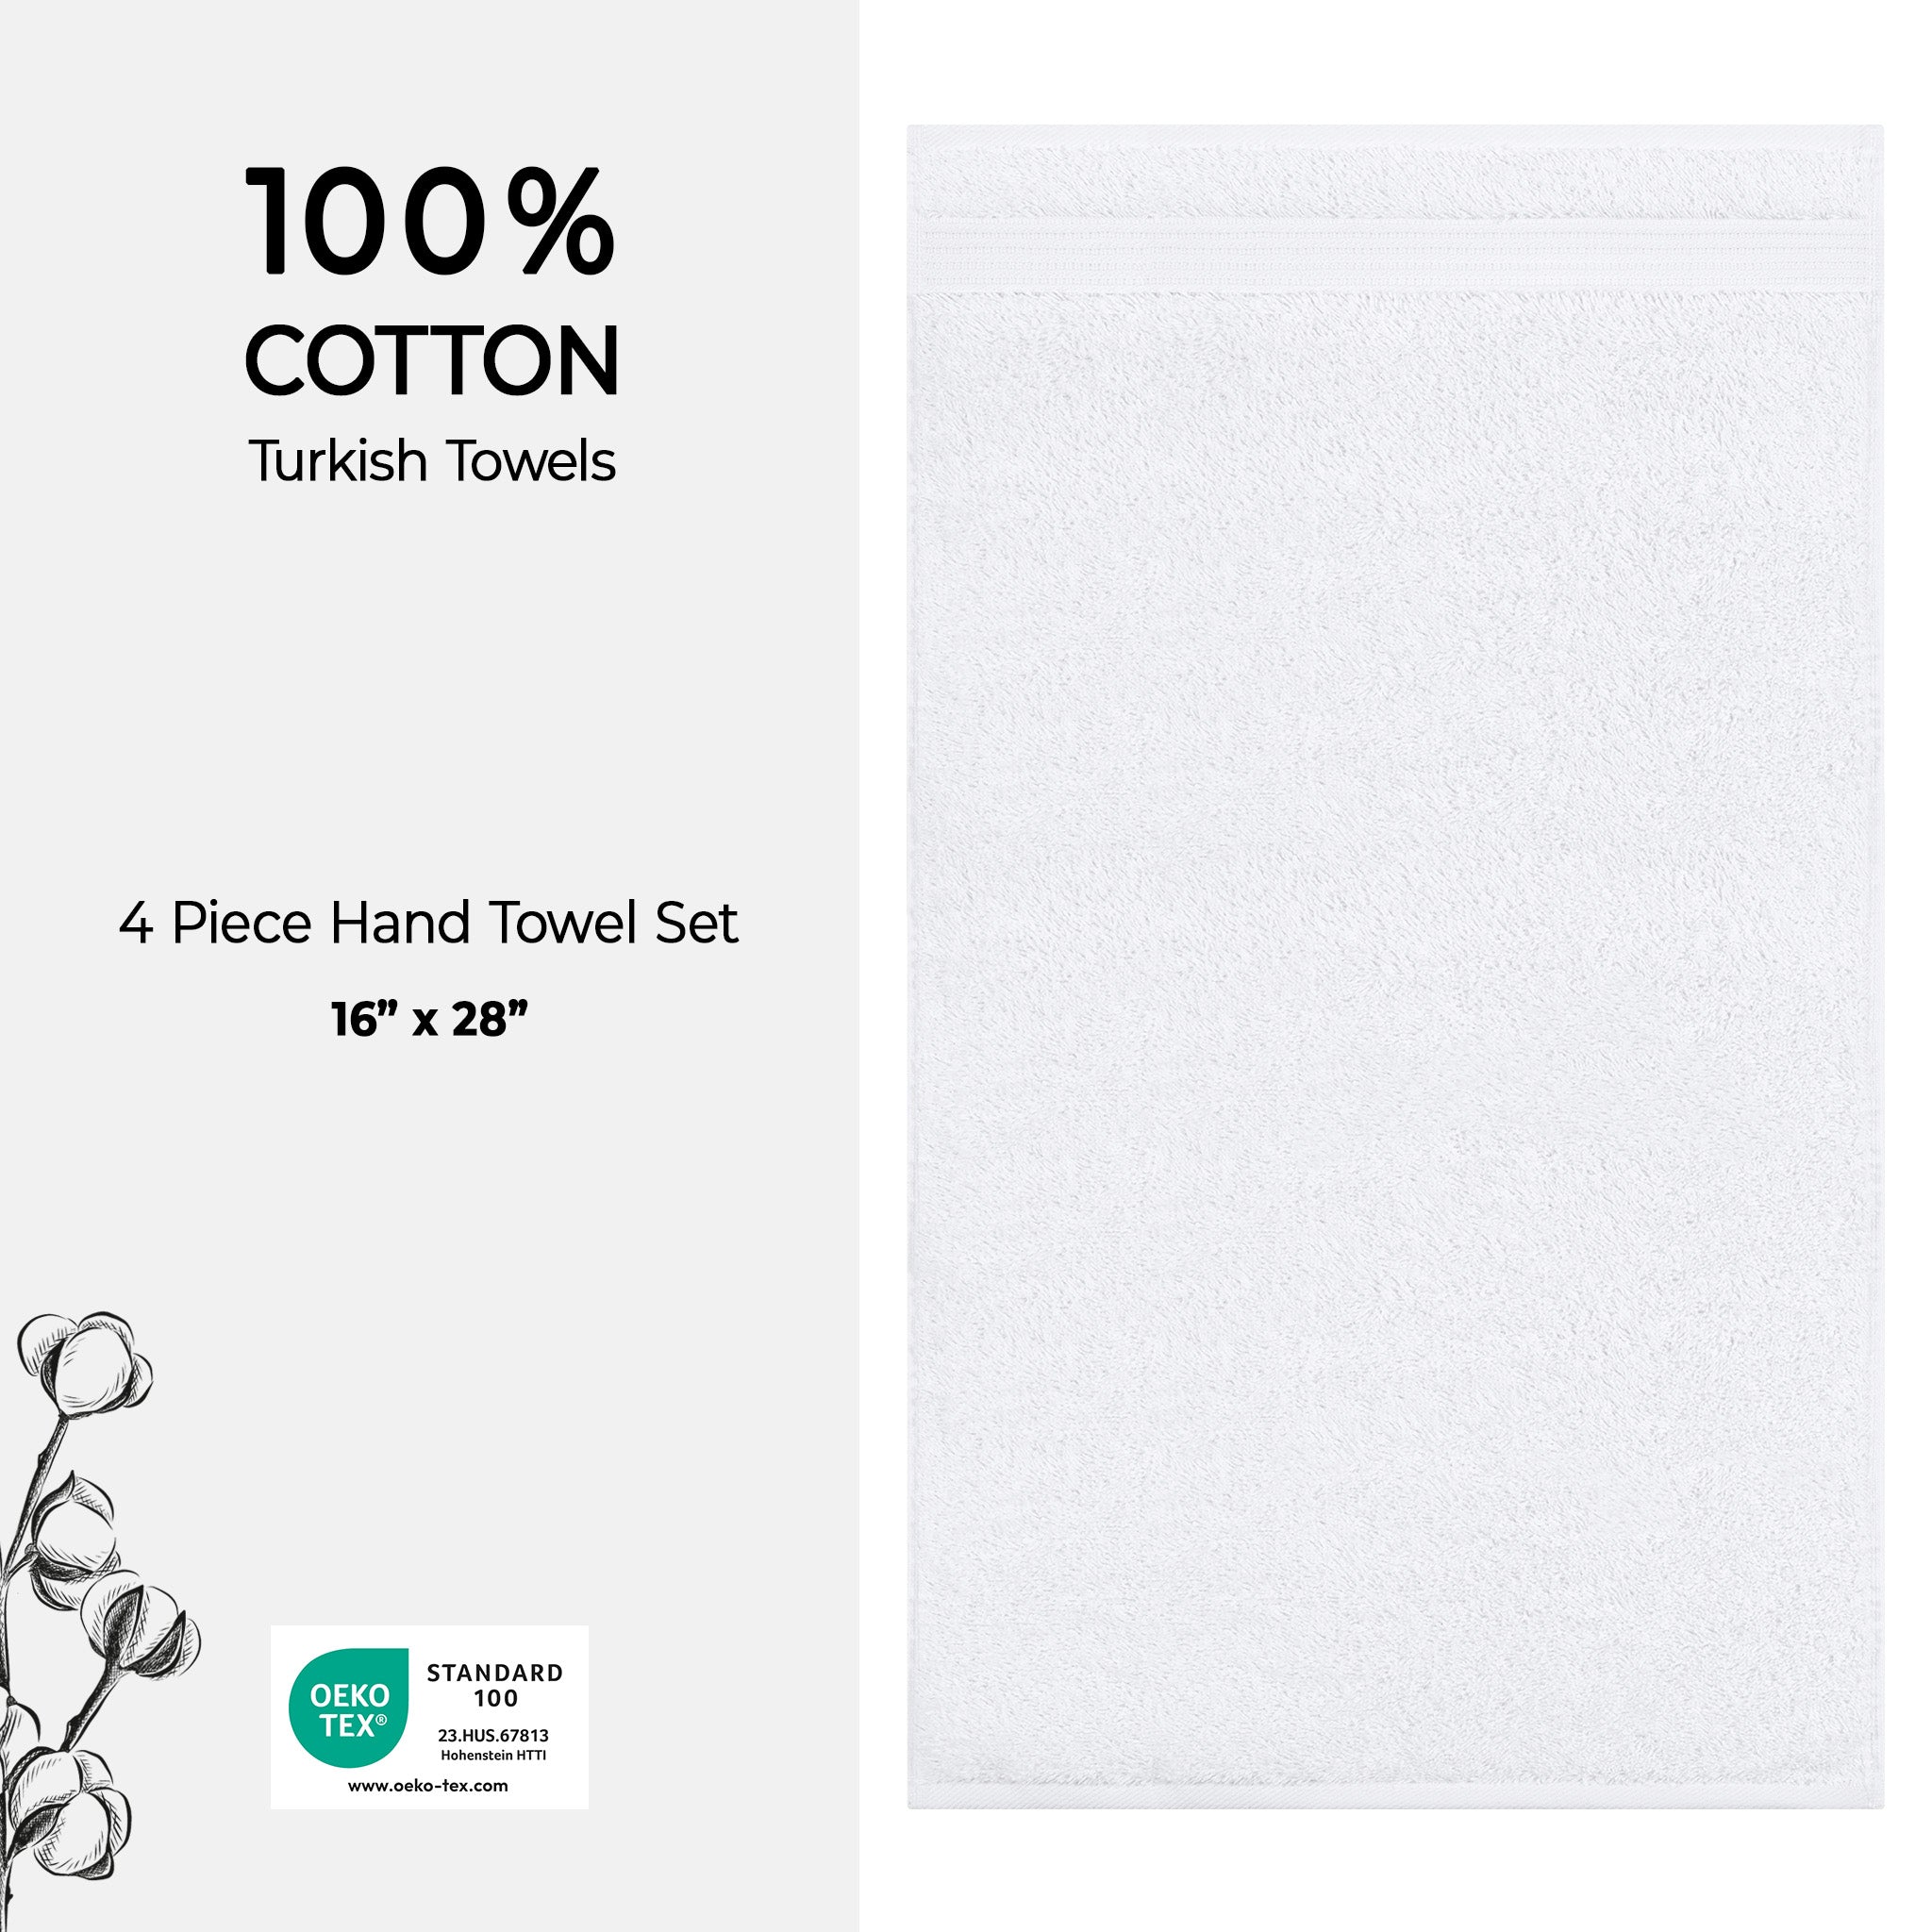 American Soft Linen Bekos 100% Cotton Turkish Towels, 4 Piece Hand Towel Set -white-04